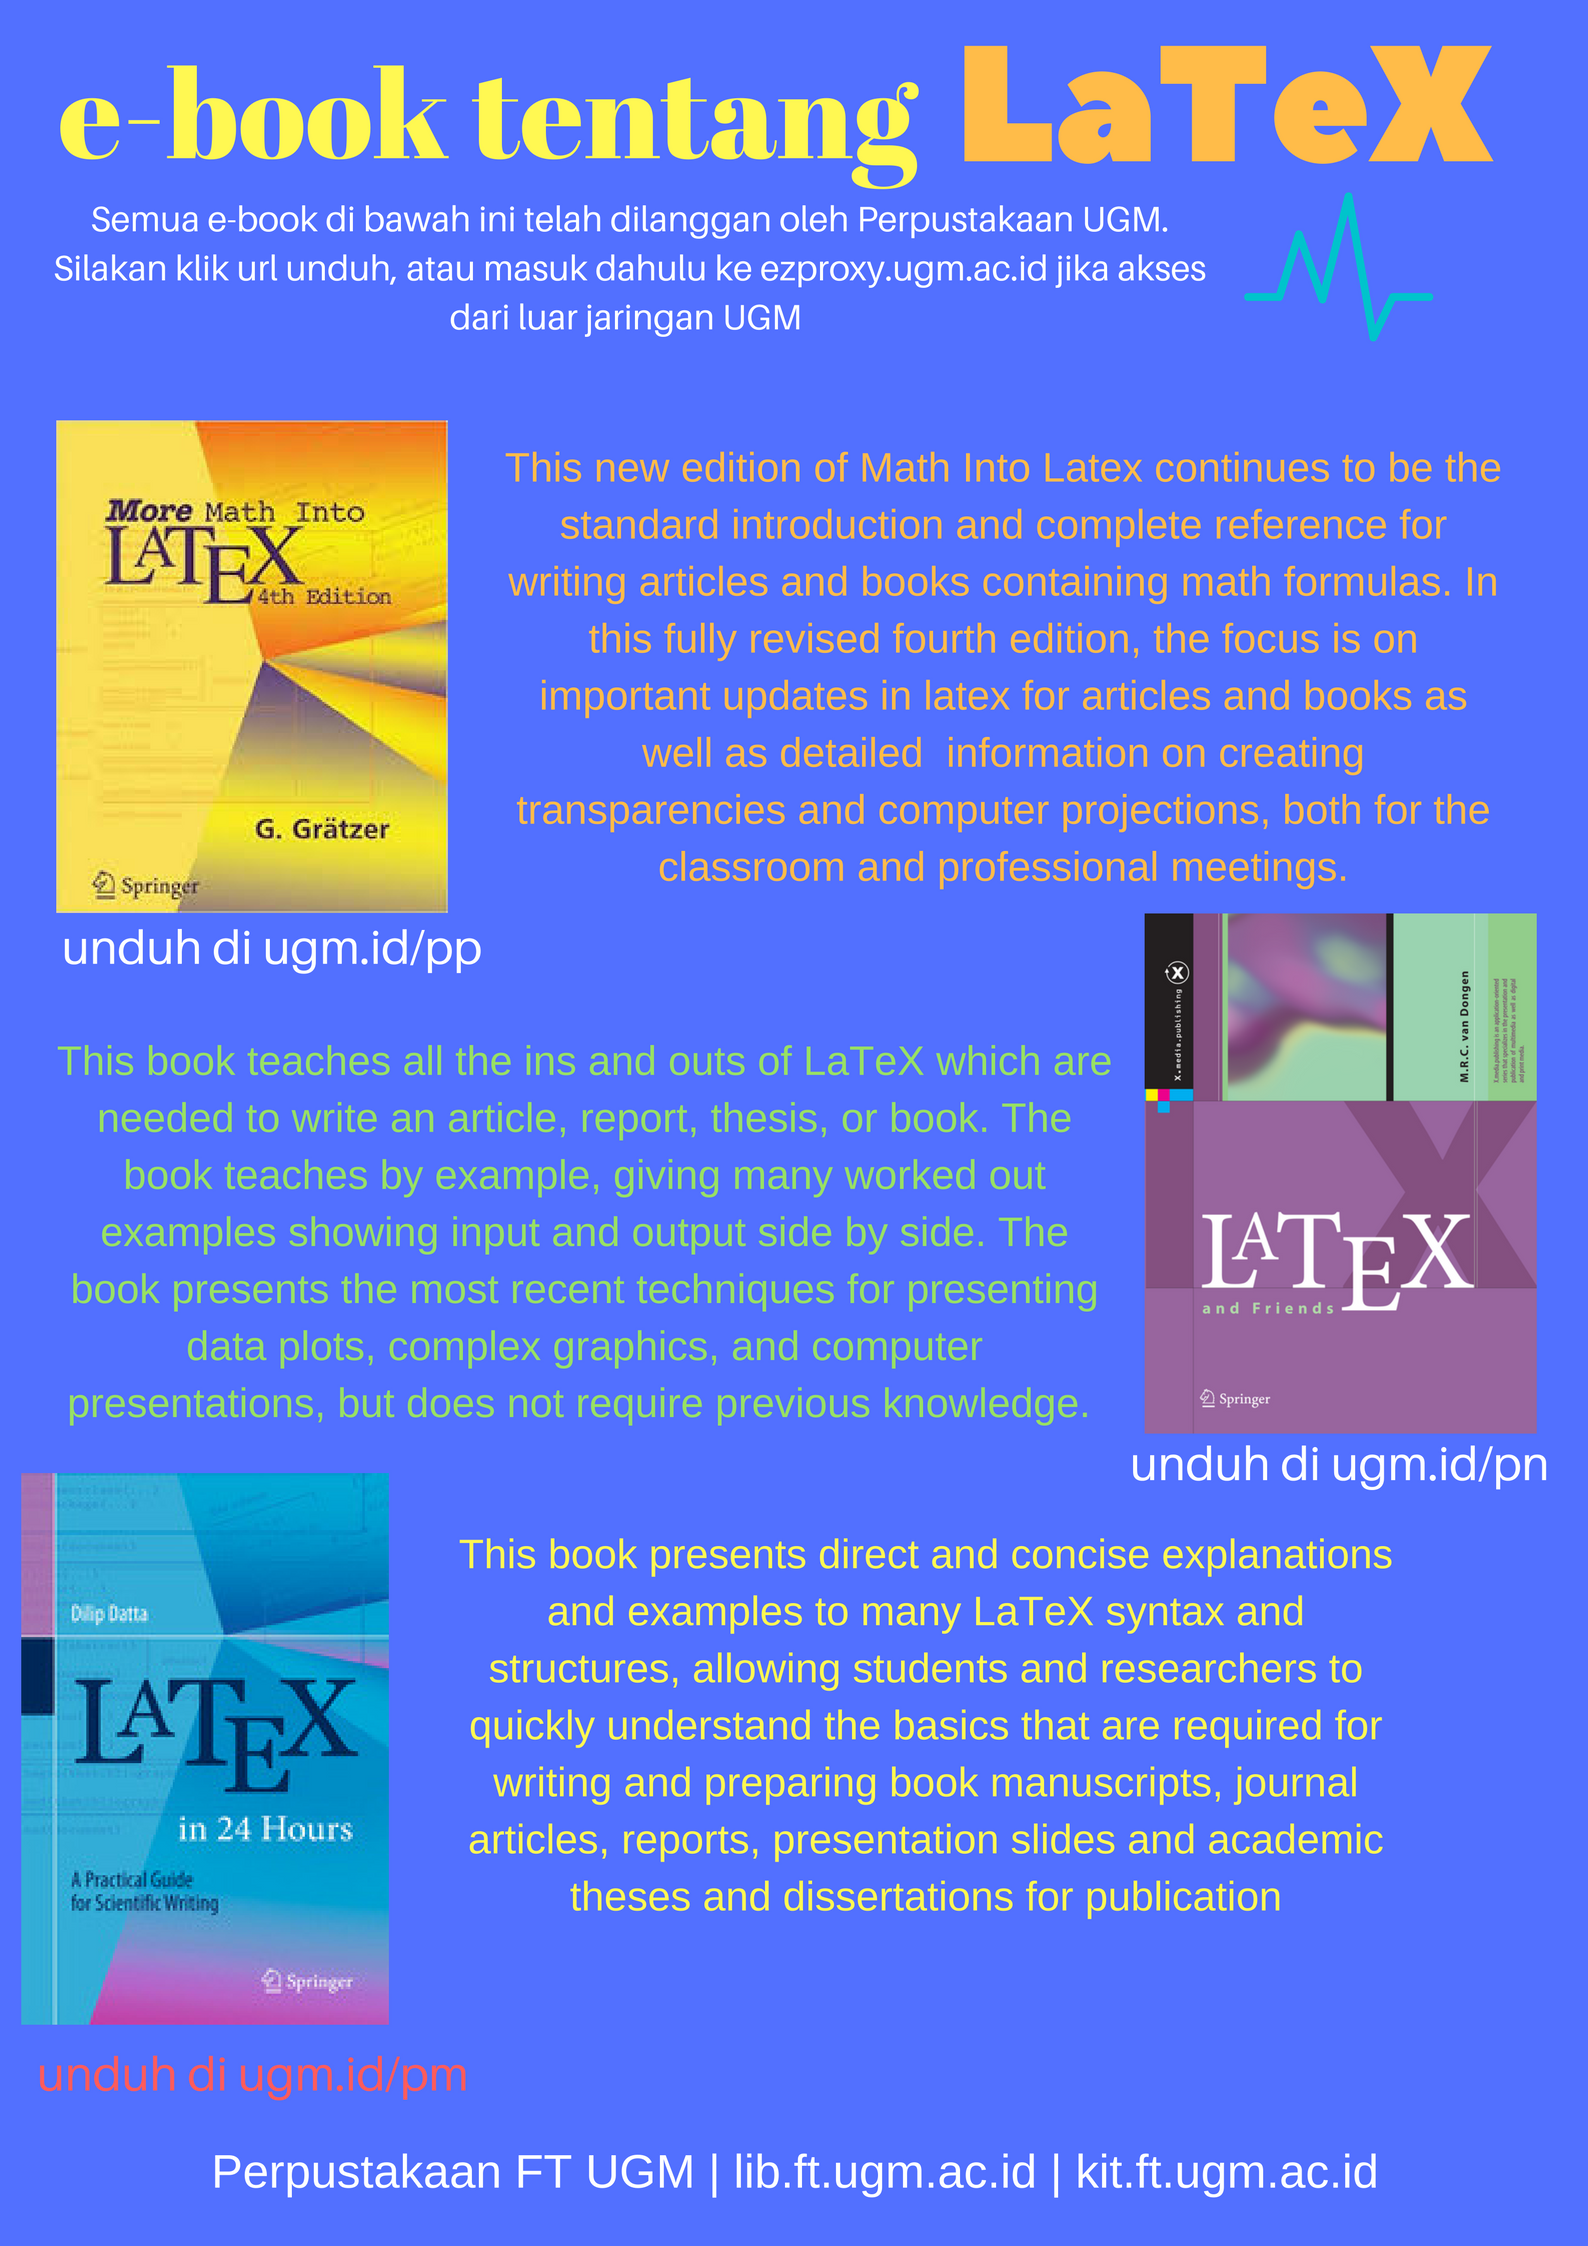 E-book tentang LaTeX